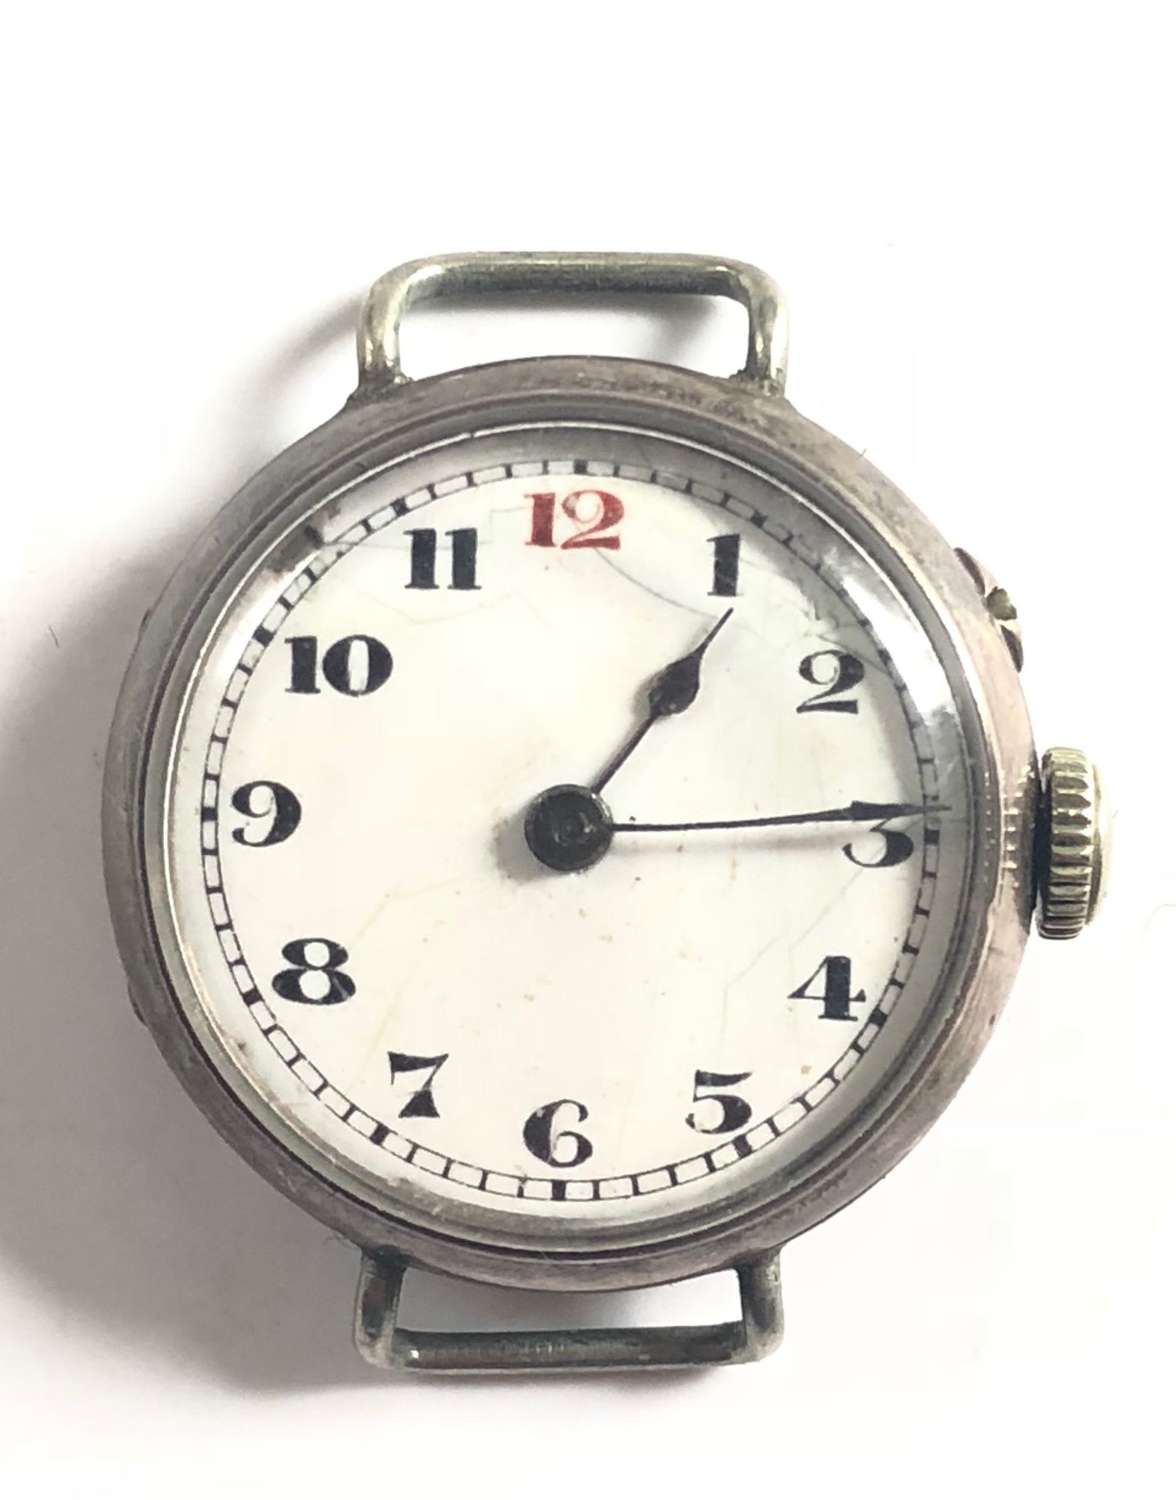 WW1 Period Small Face Silver Case Wristwatch.